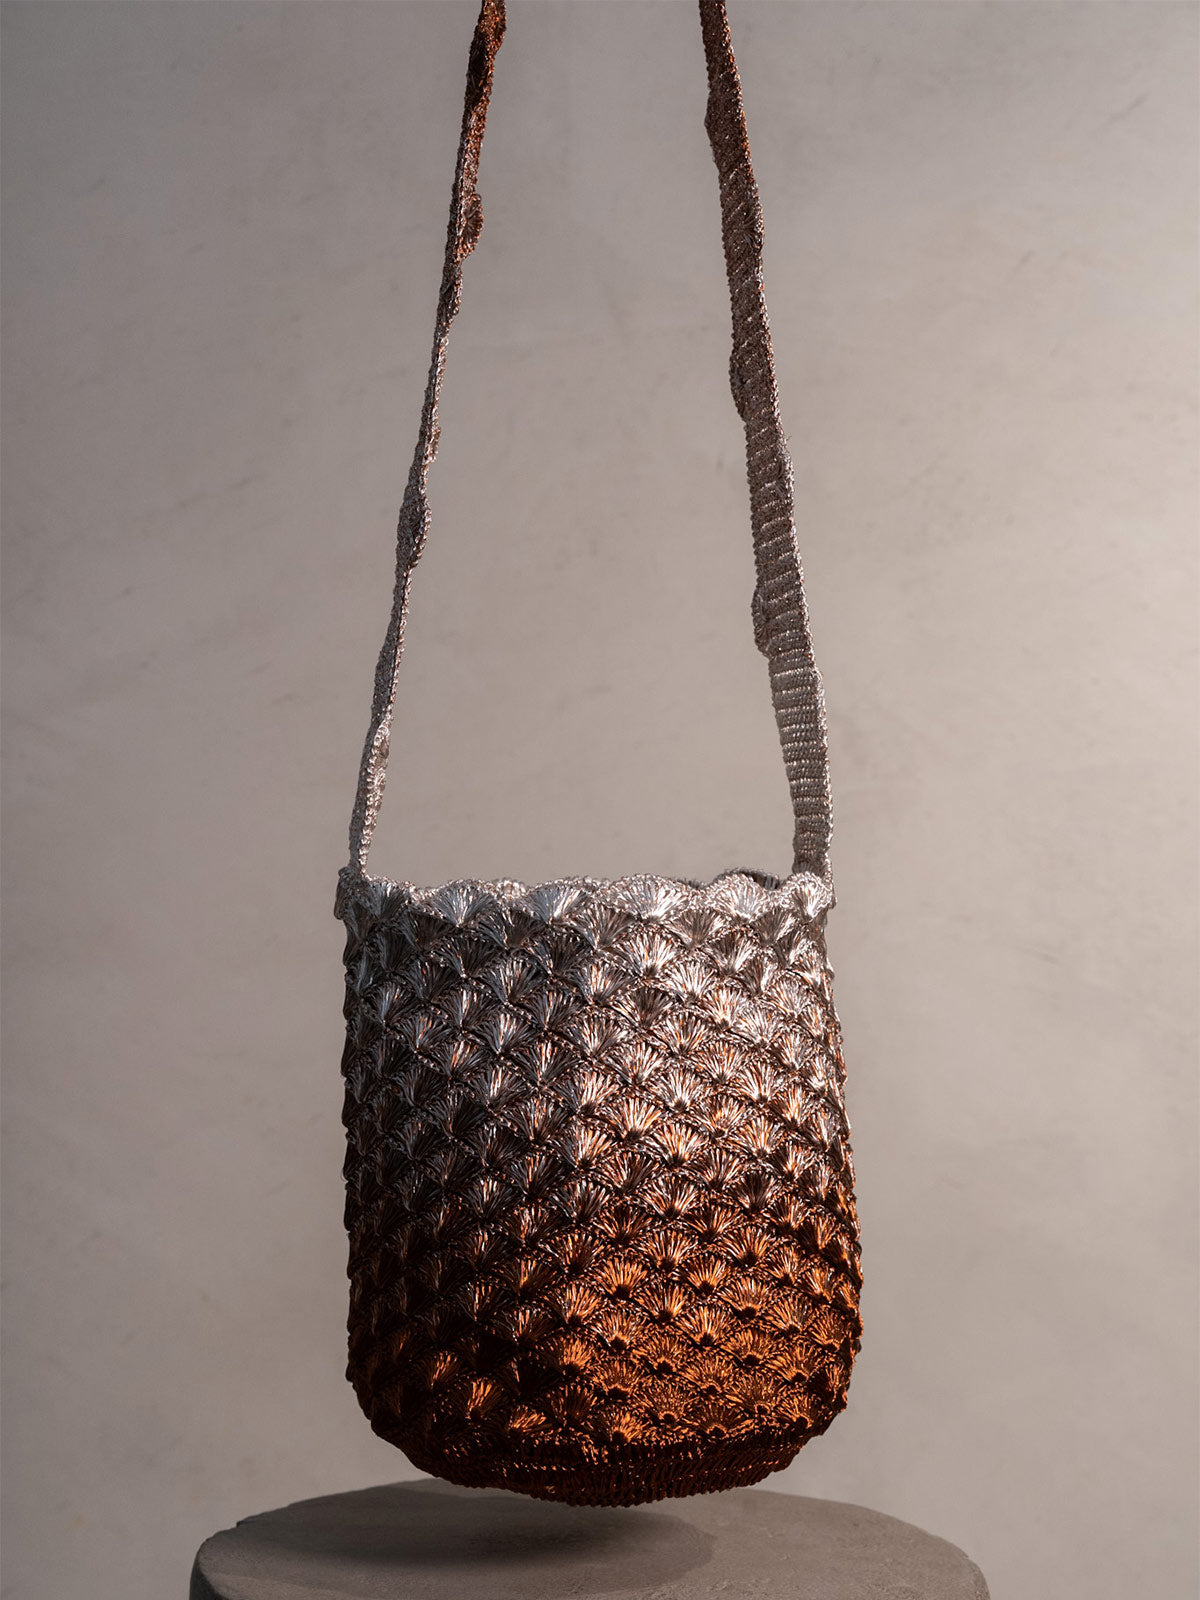 KAIA Seashell Handbag Long Strap | Copper and Silver Plated Copper